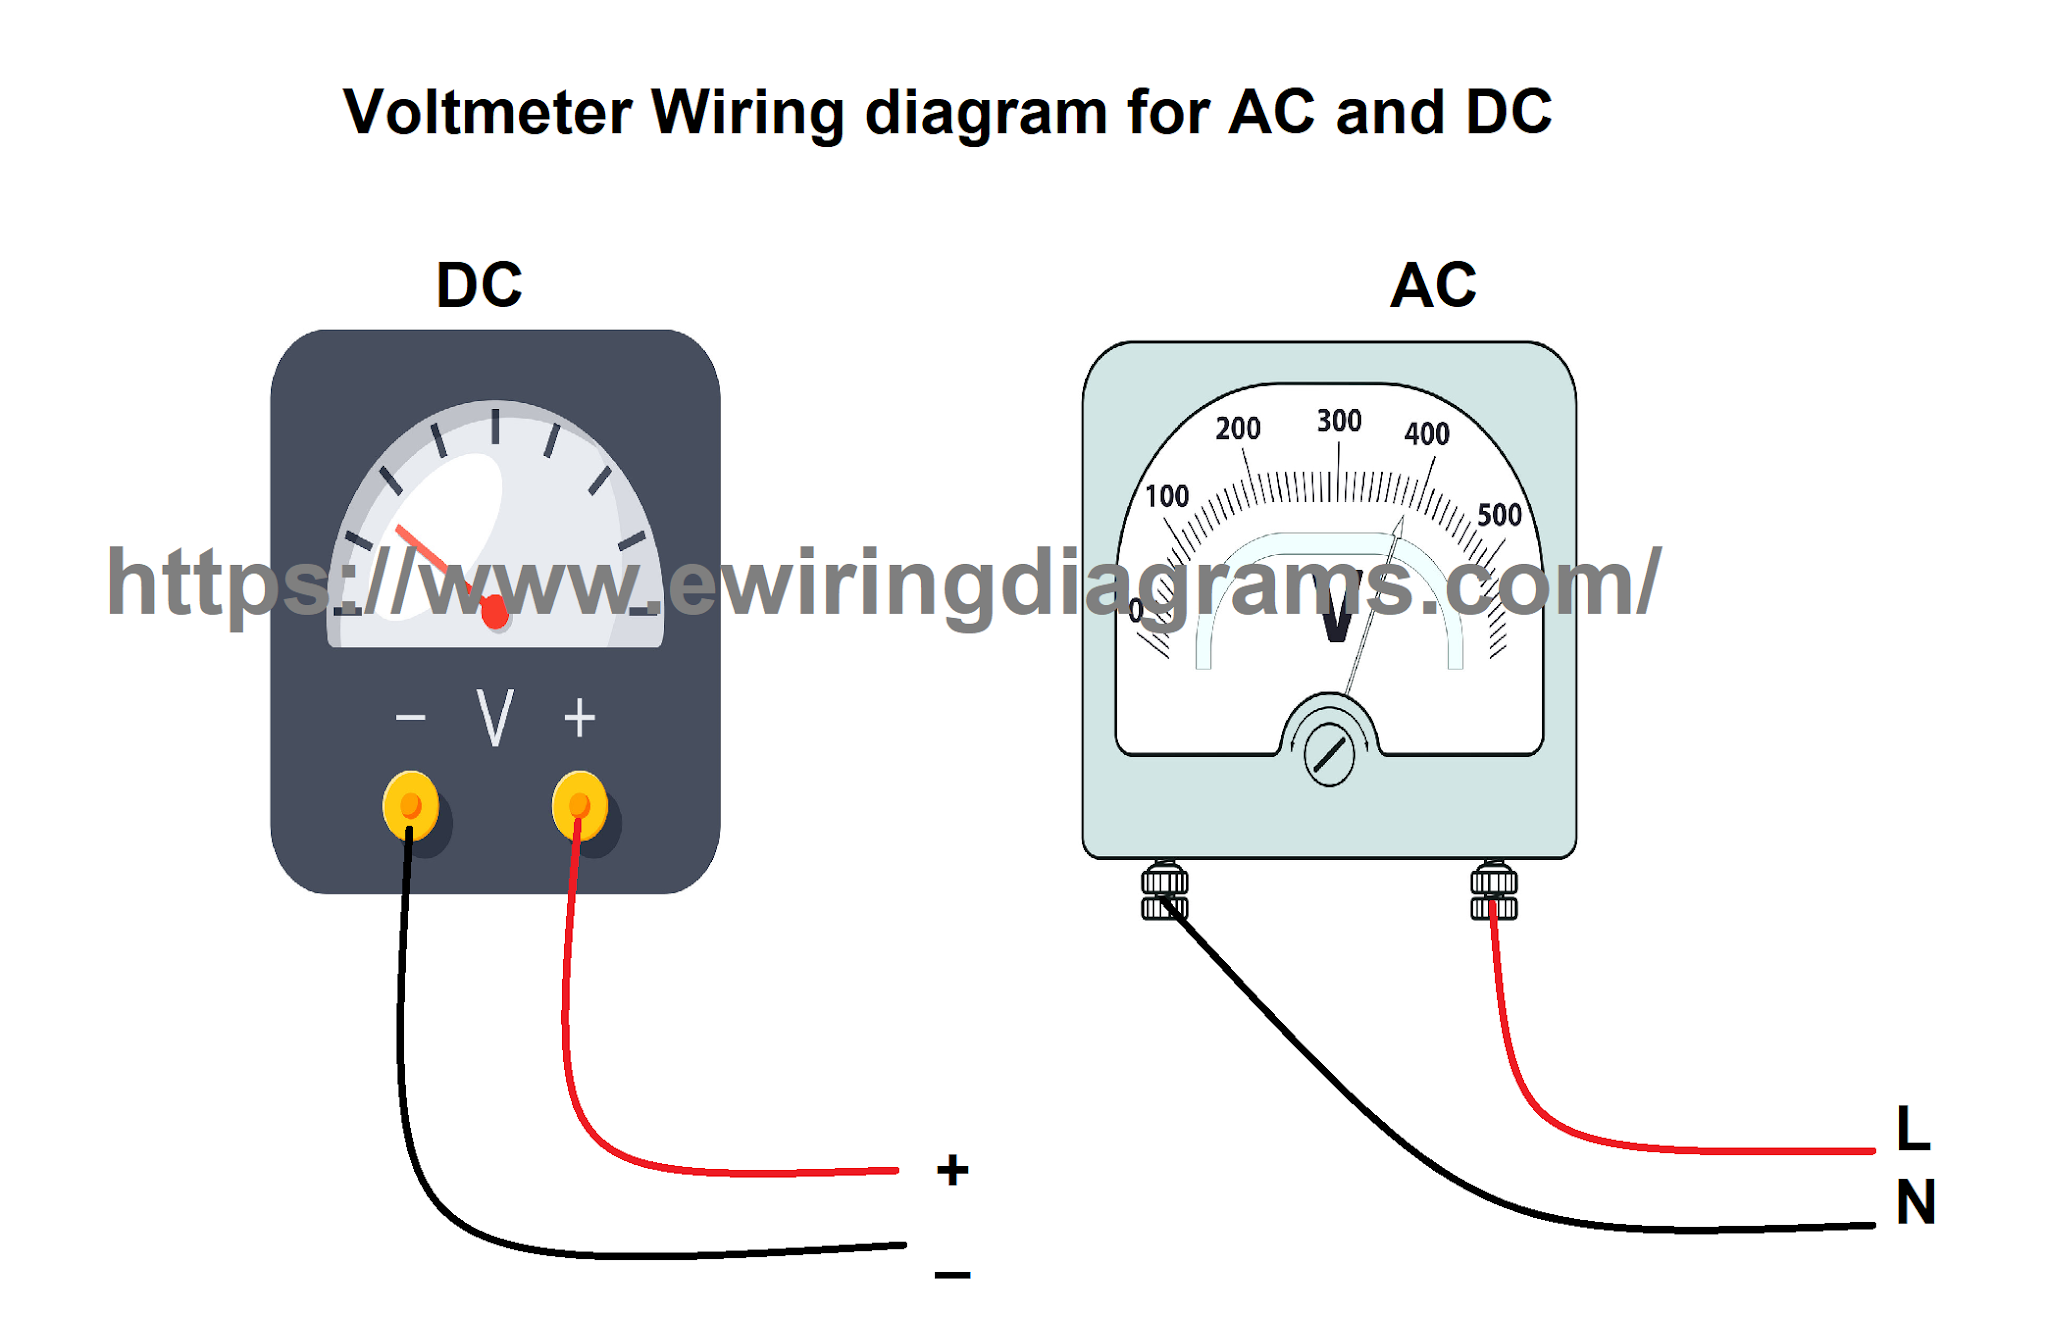 Voltmeter Connection Diagram For AC/DC